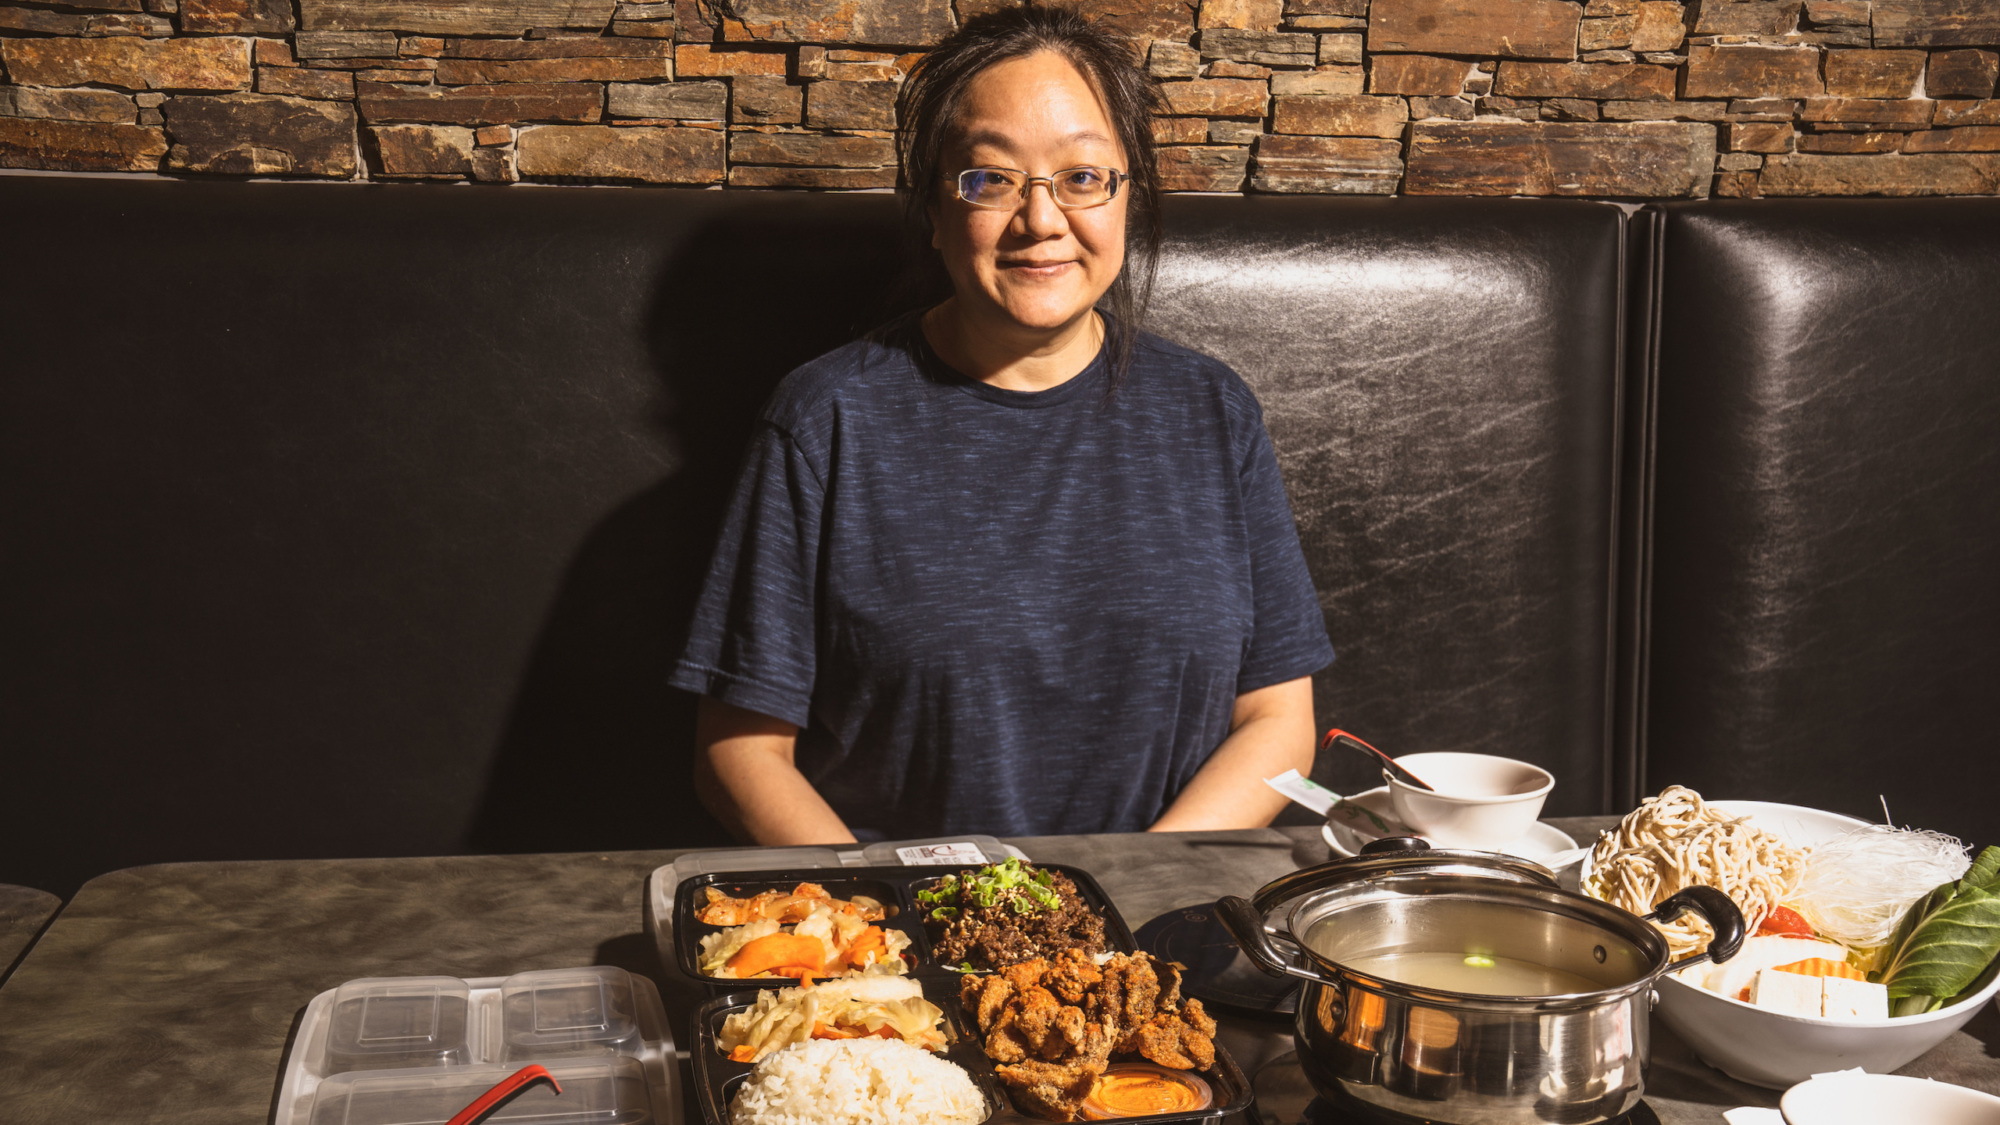 Immigration lawyer, community activist, and restaurant co-owner Debbie Chen inside her restaurant, Shabu House, in Houston's Asiatown.